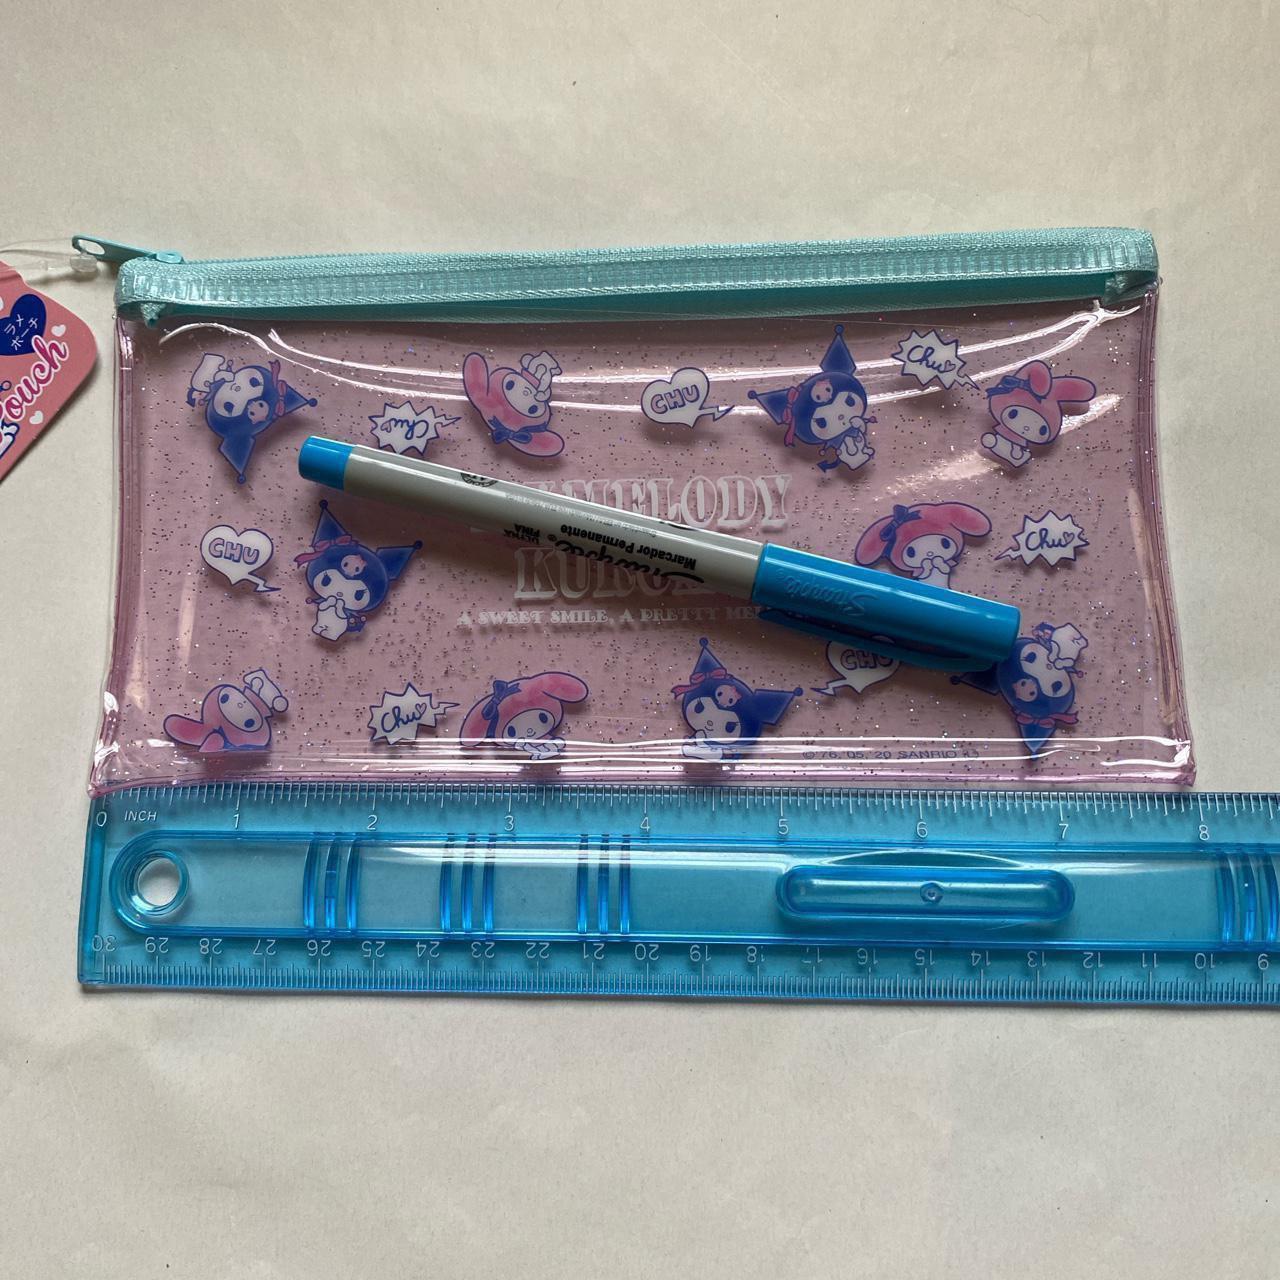 Kuromi Sanrio Pastel Purple Star Pouch, Pencil case - Depop